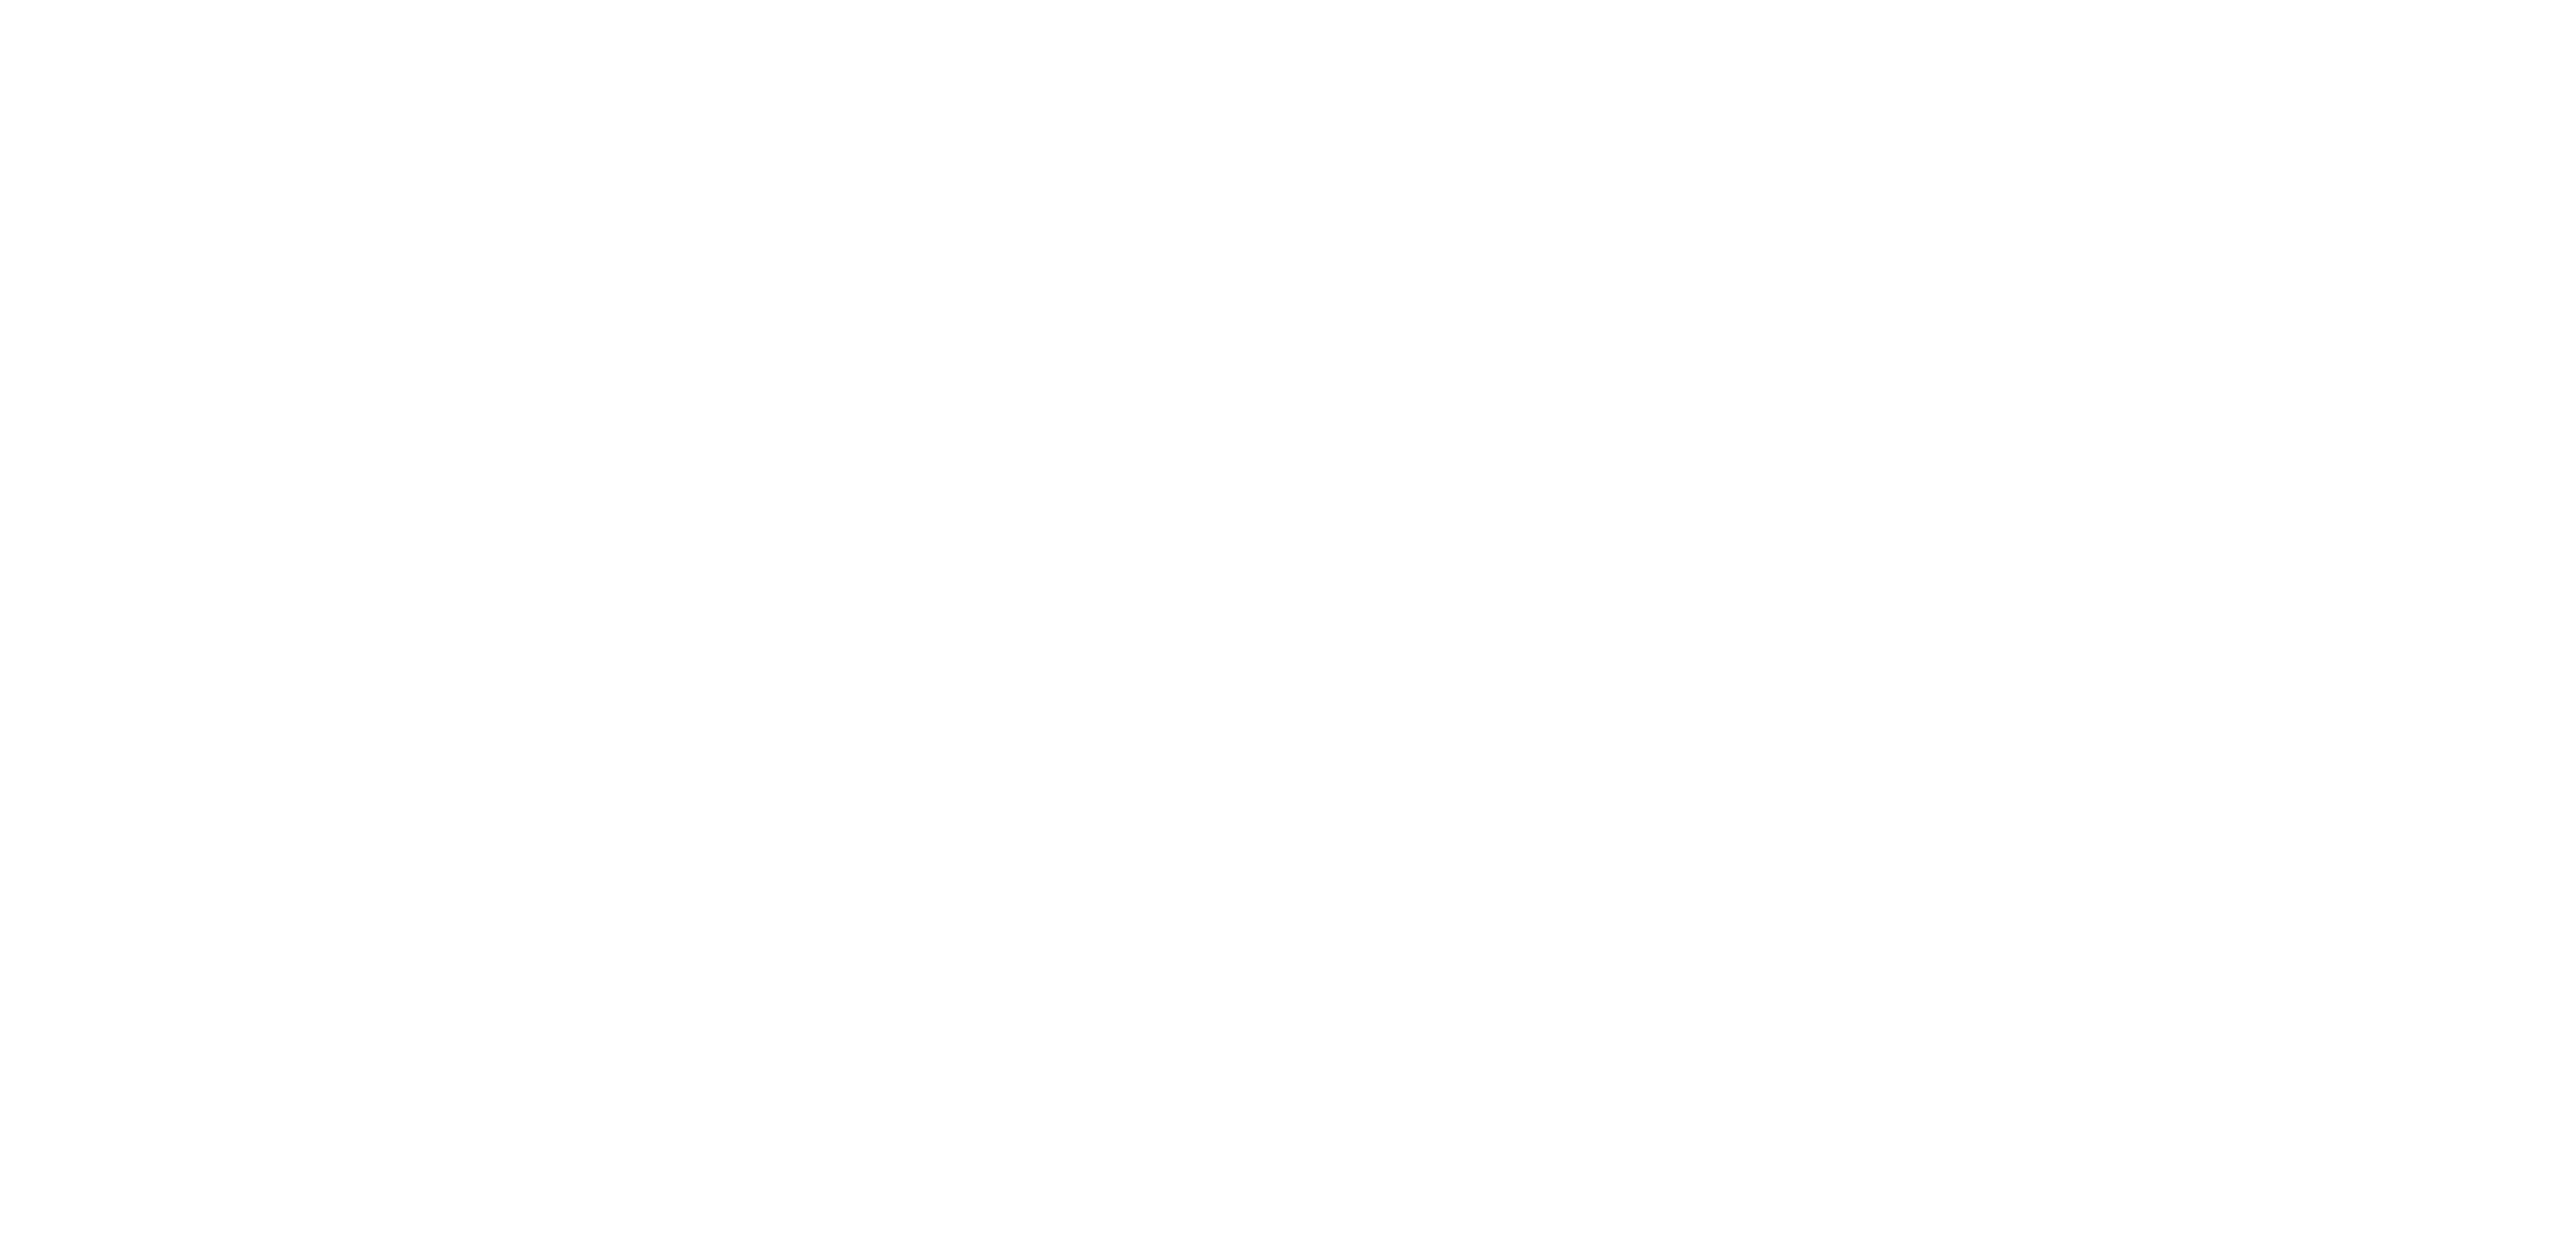 White Blumvox Studios logo with transparent background